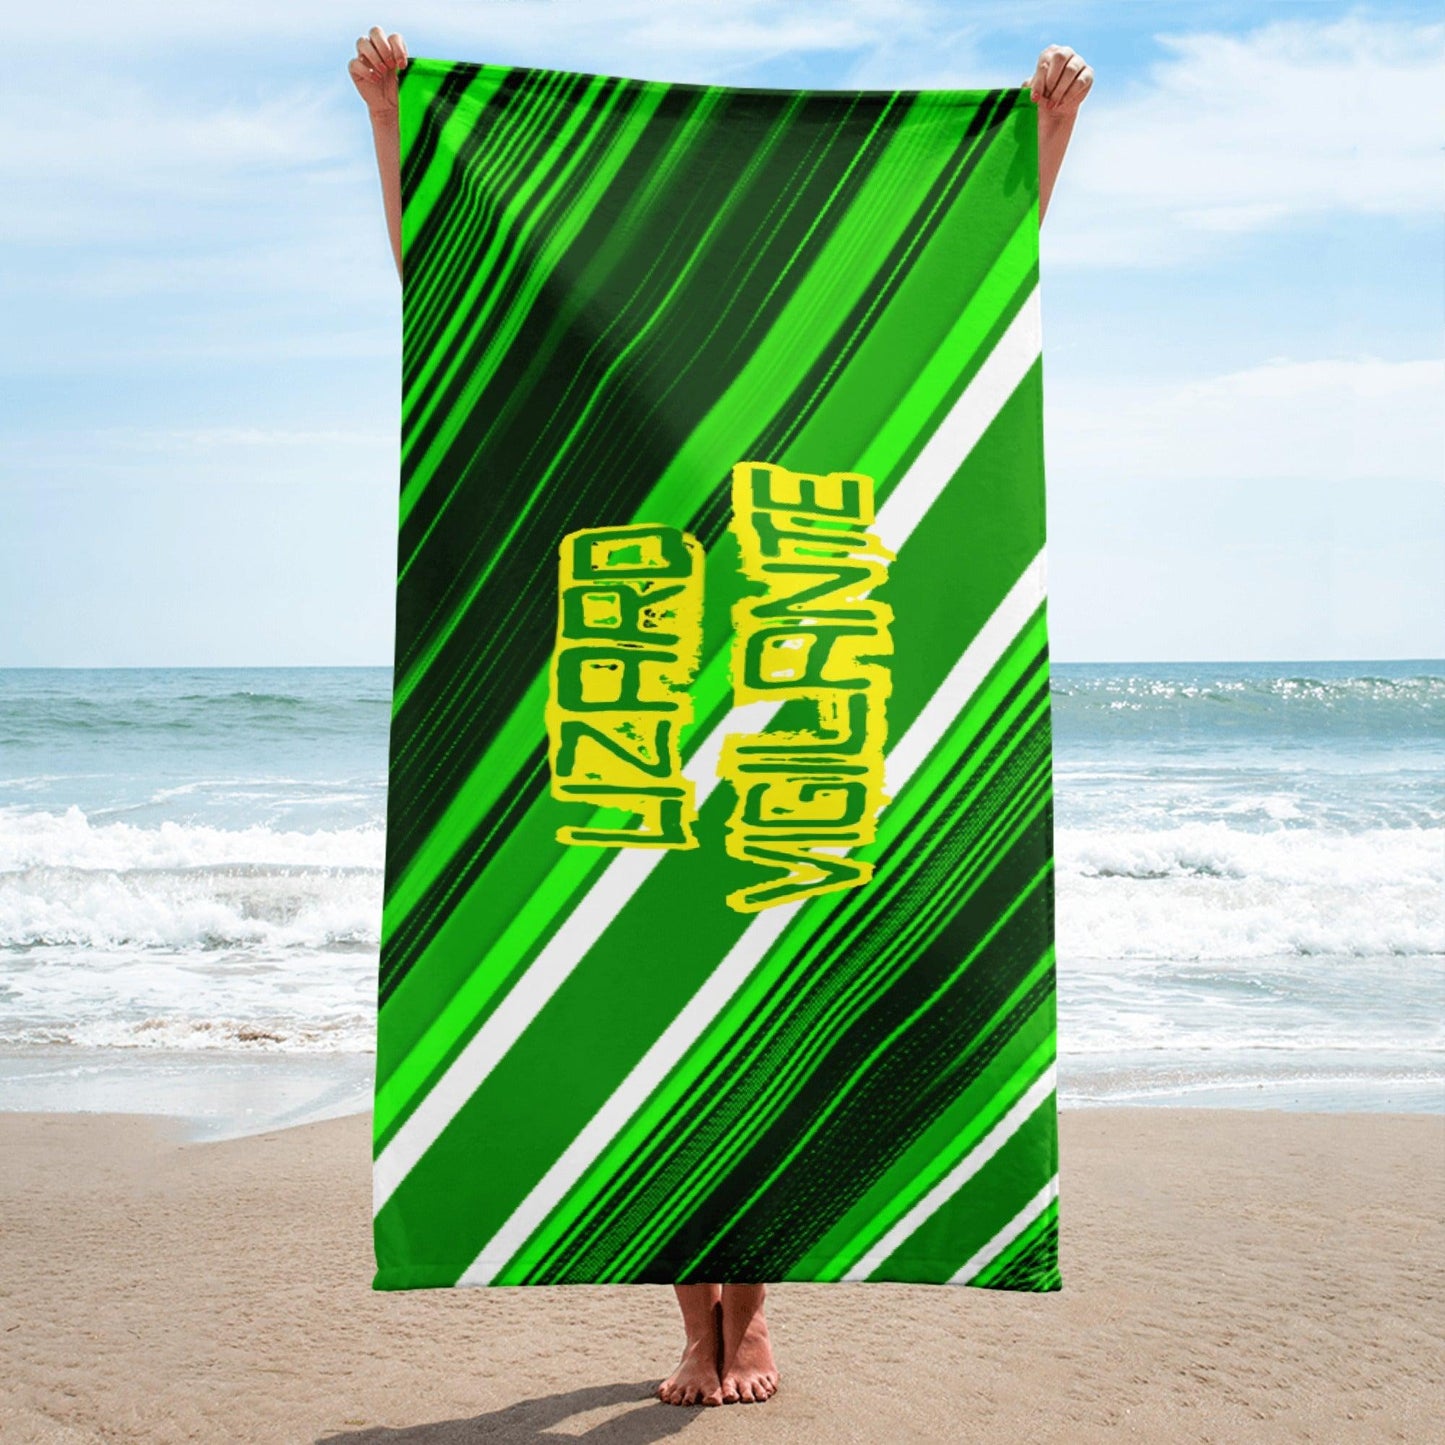 Rep the Lizard Sliced Green Towel with Logoo GET IT FAST - Lizard Vigilante